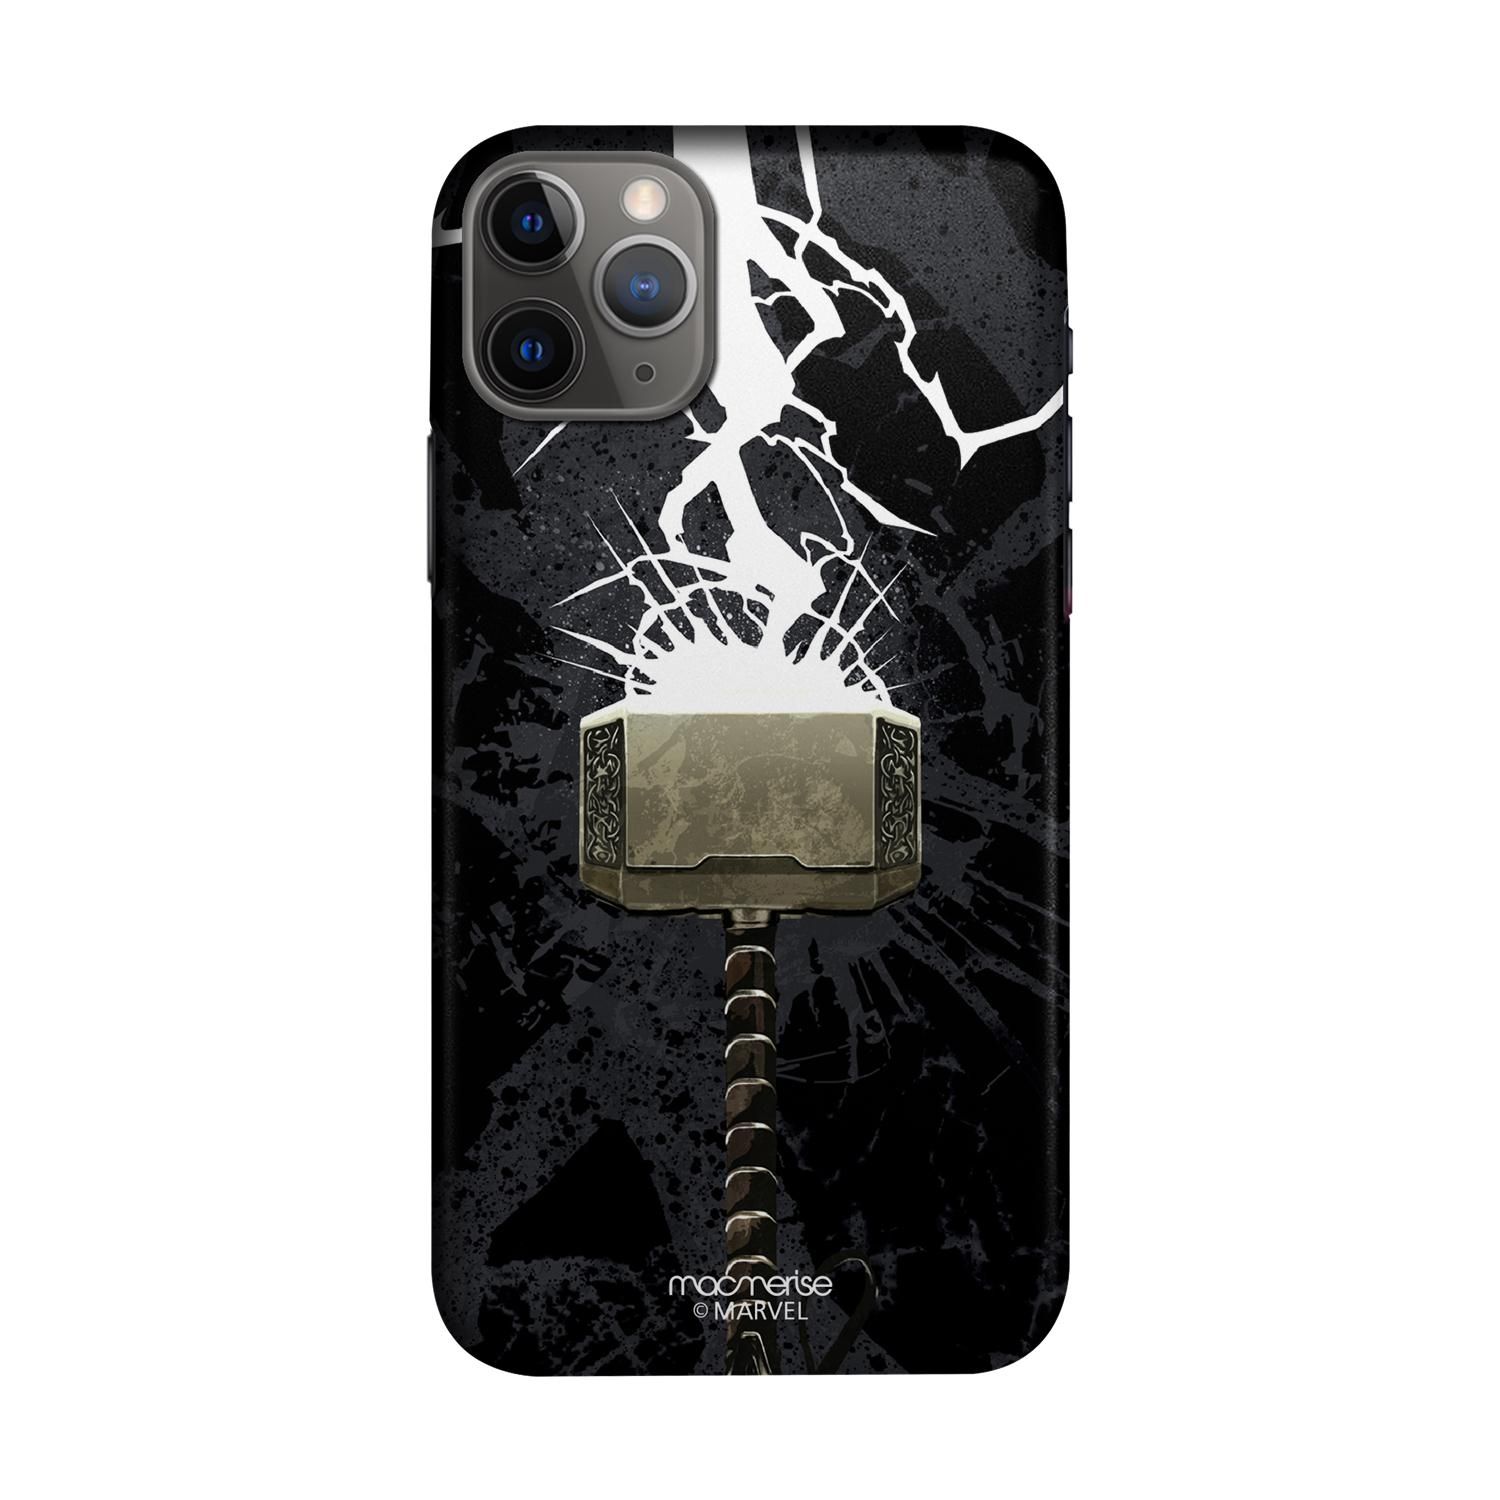 Buy The Thunderous Hammer - Sleek Phone Case for iPhone 11 Pro Online